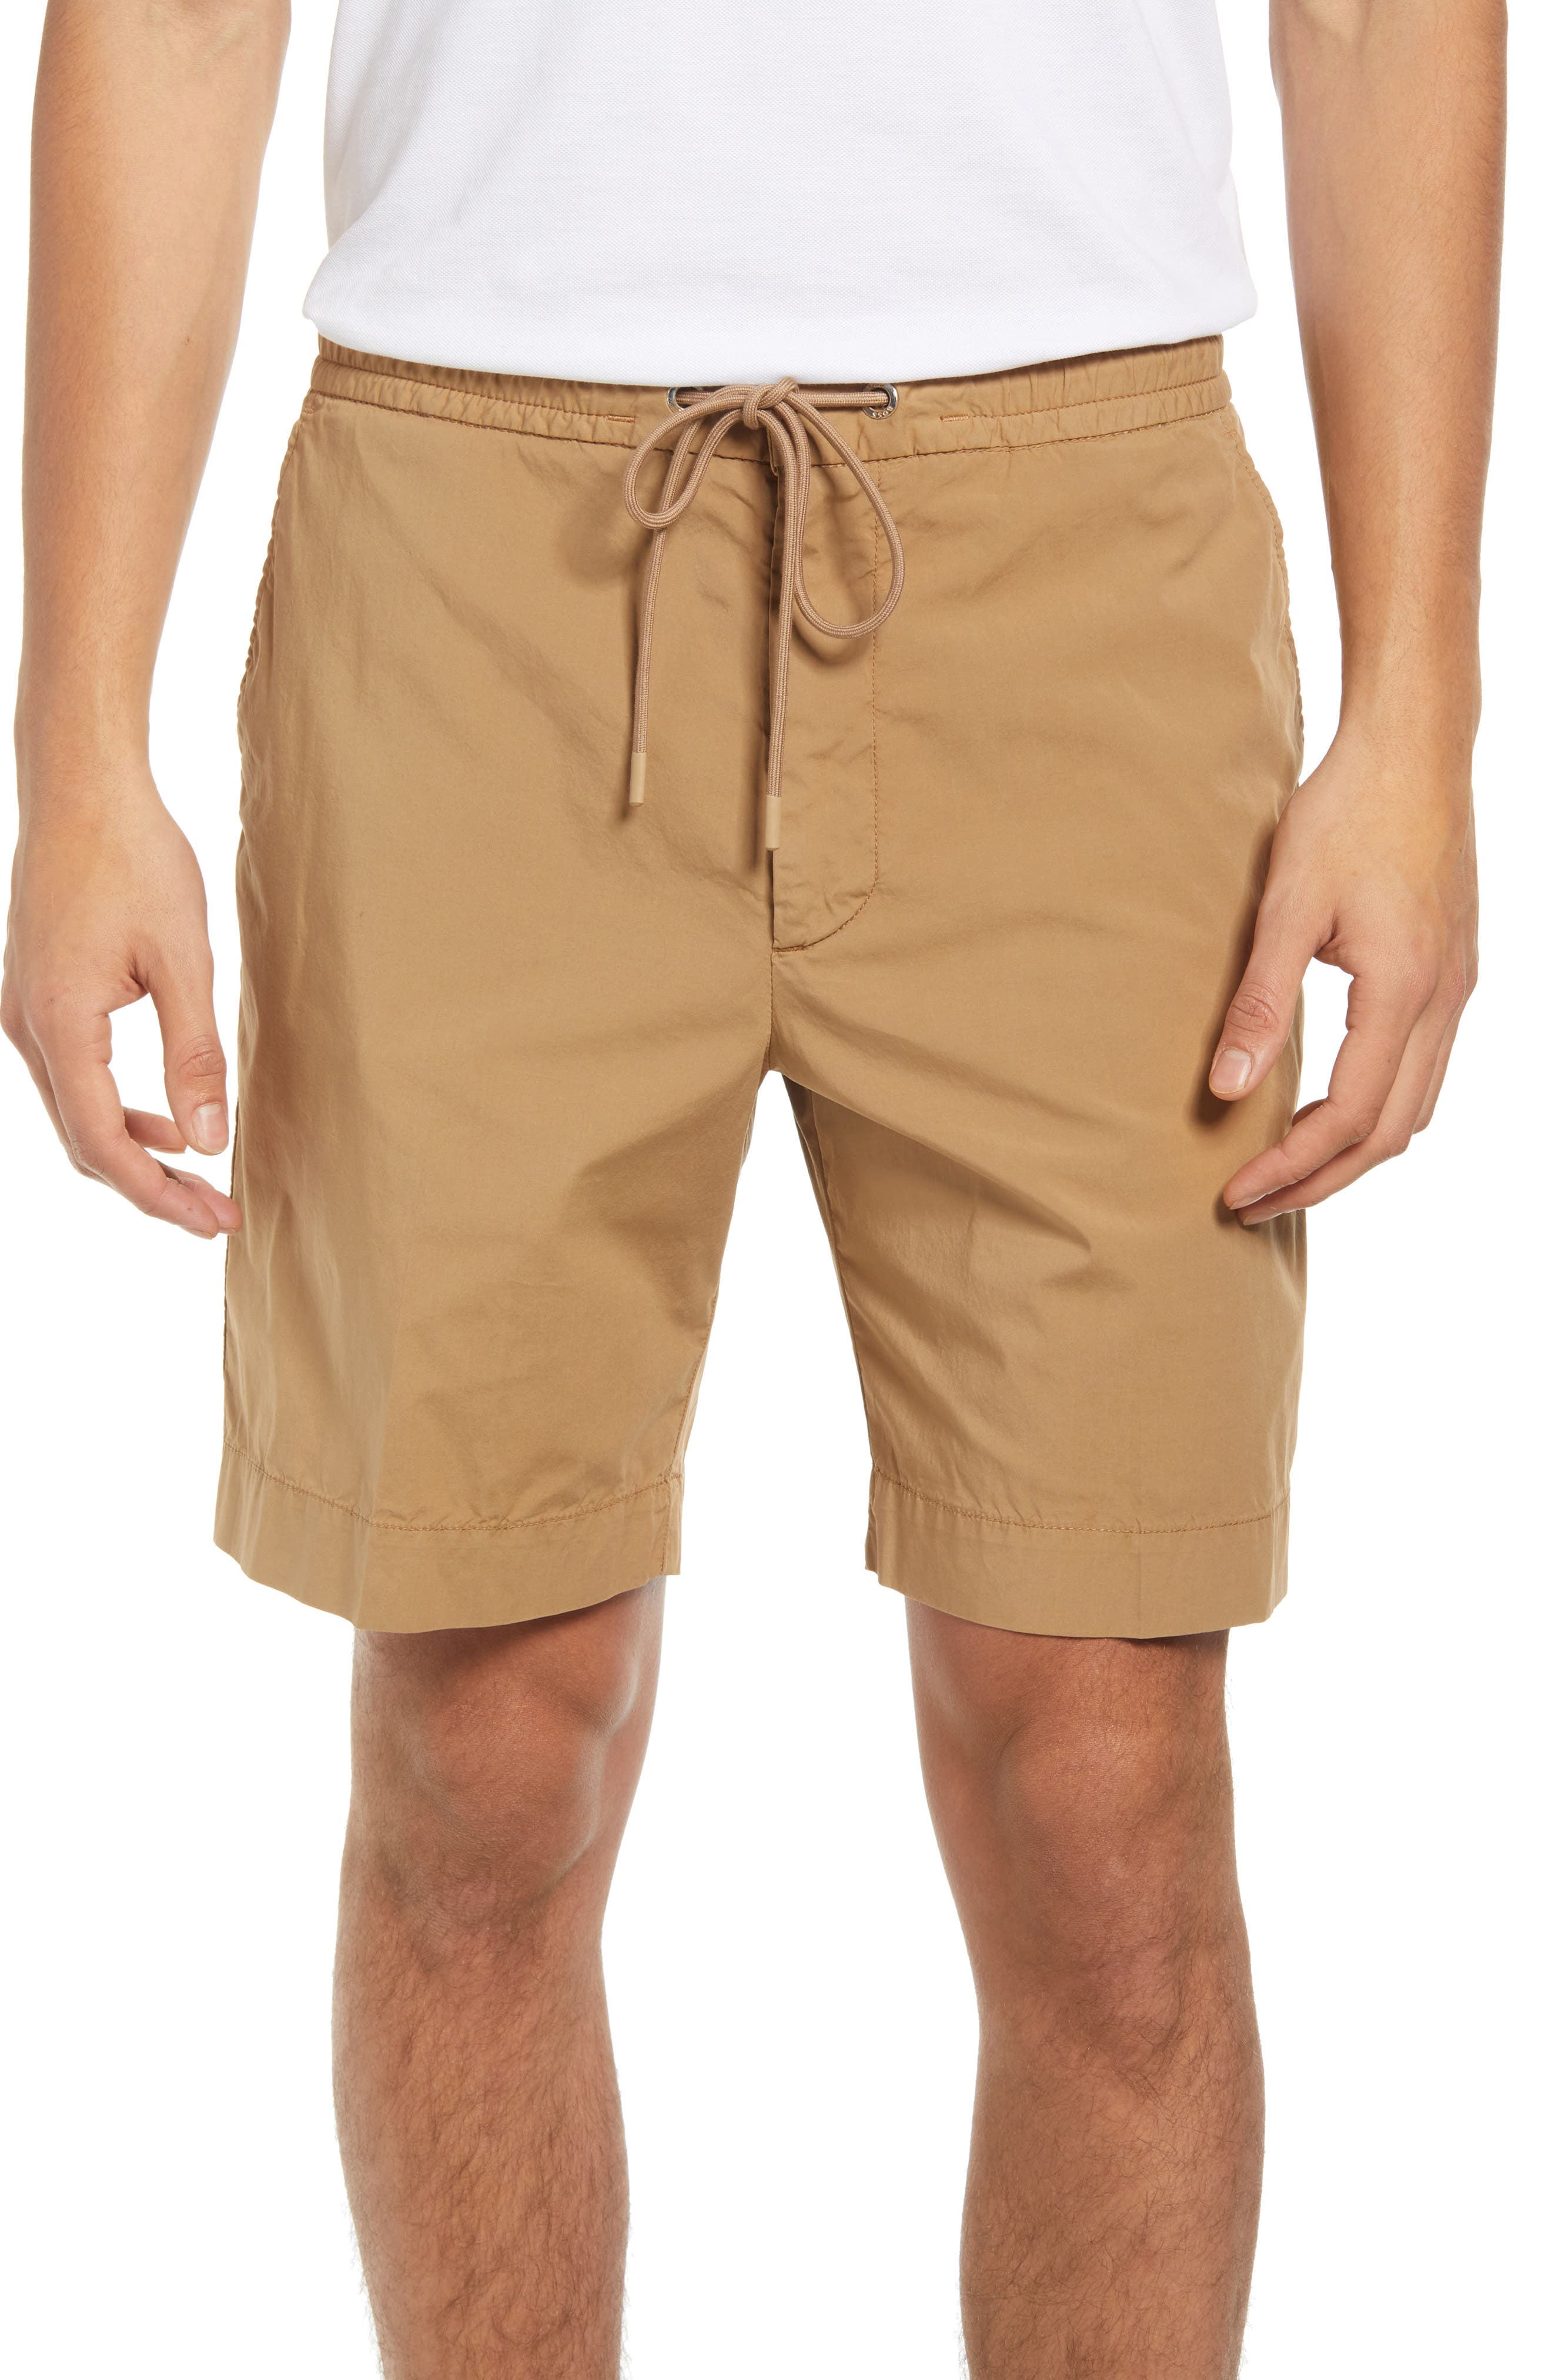 Micros Boys Stretch Cotton Shorts Size 7 Color Lt Khaki 